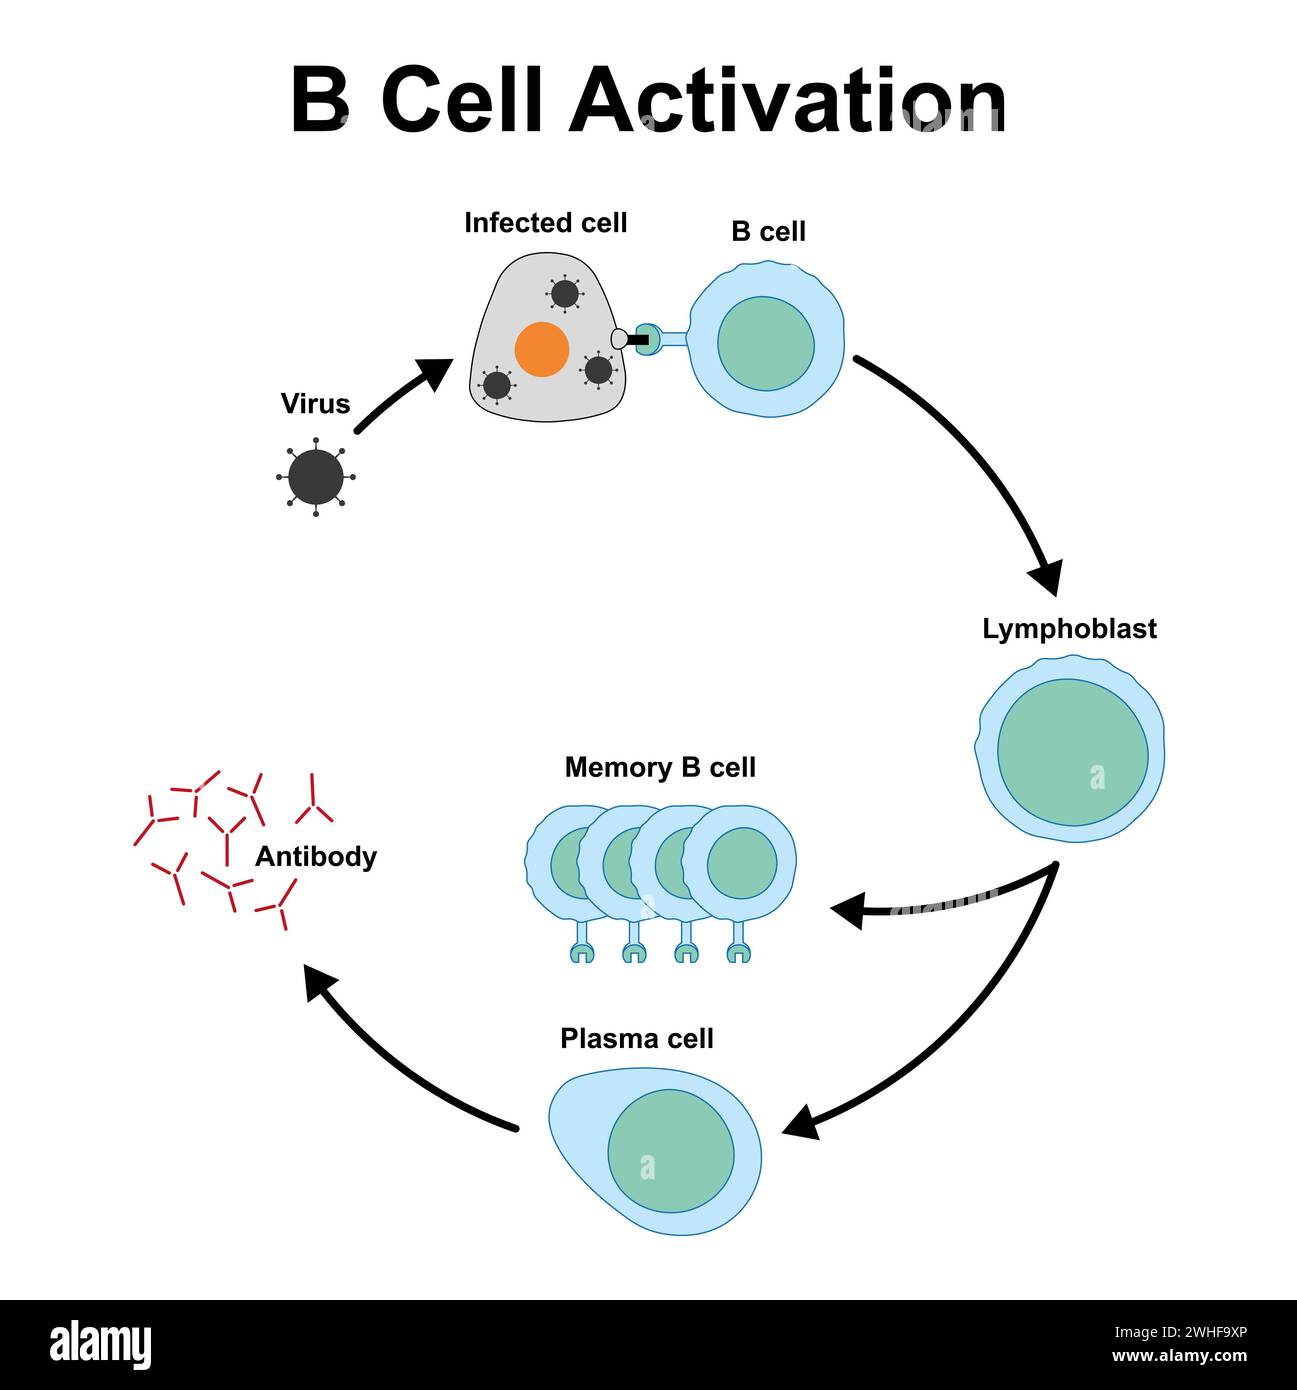 B cell activation, illustration Stock Photo